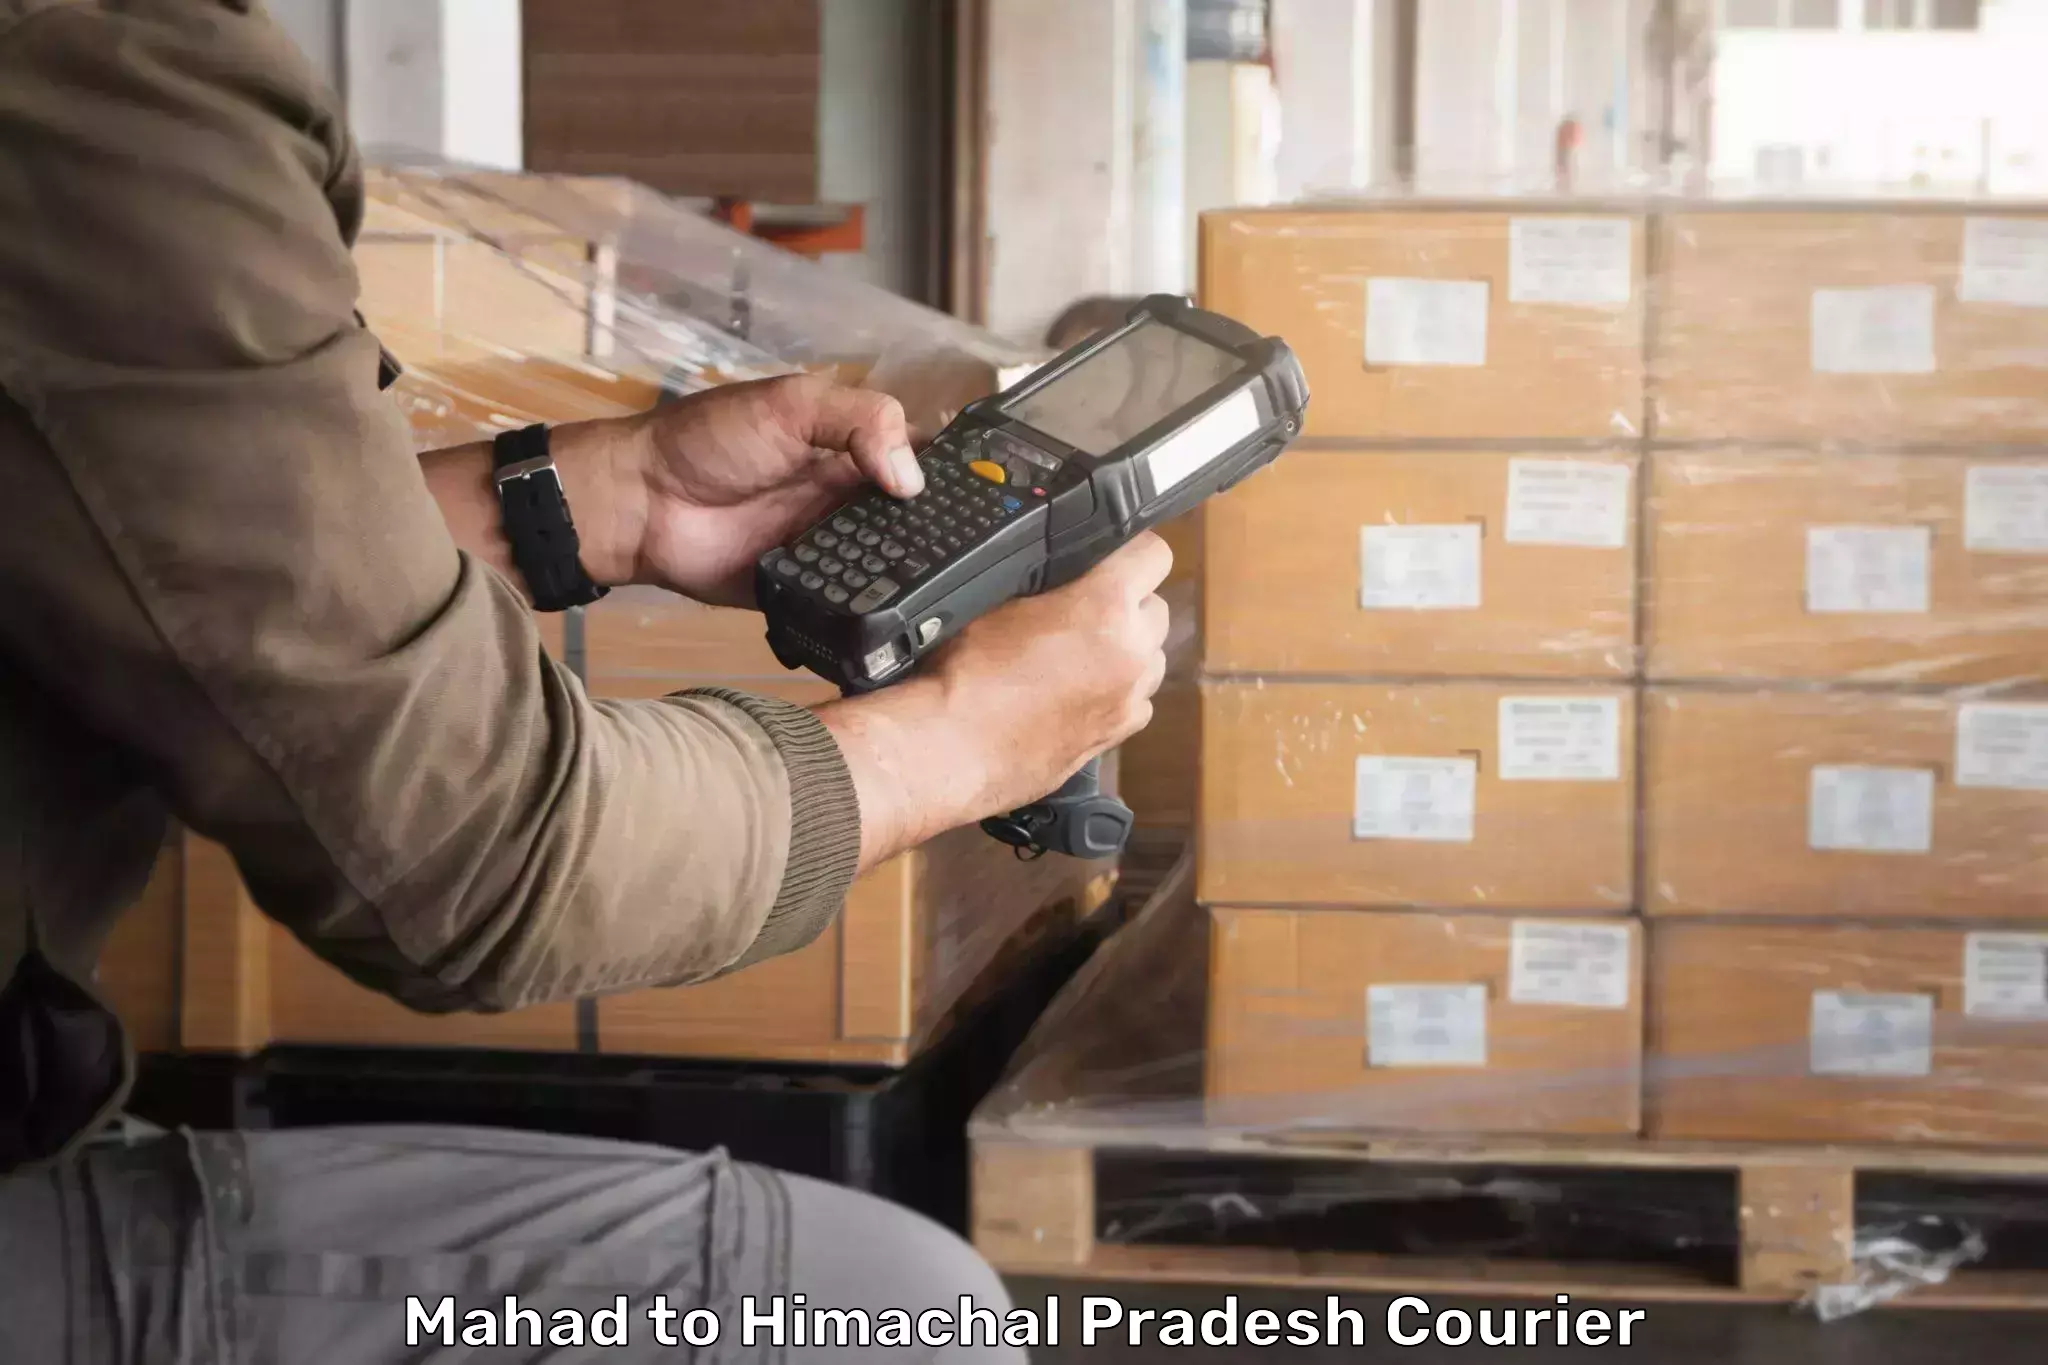 User-friendly courier app Mahad to Himachal Pradesh